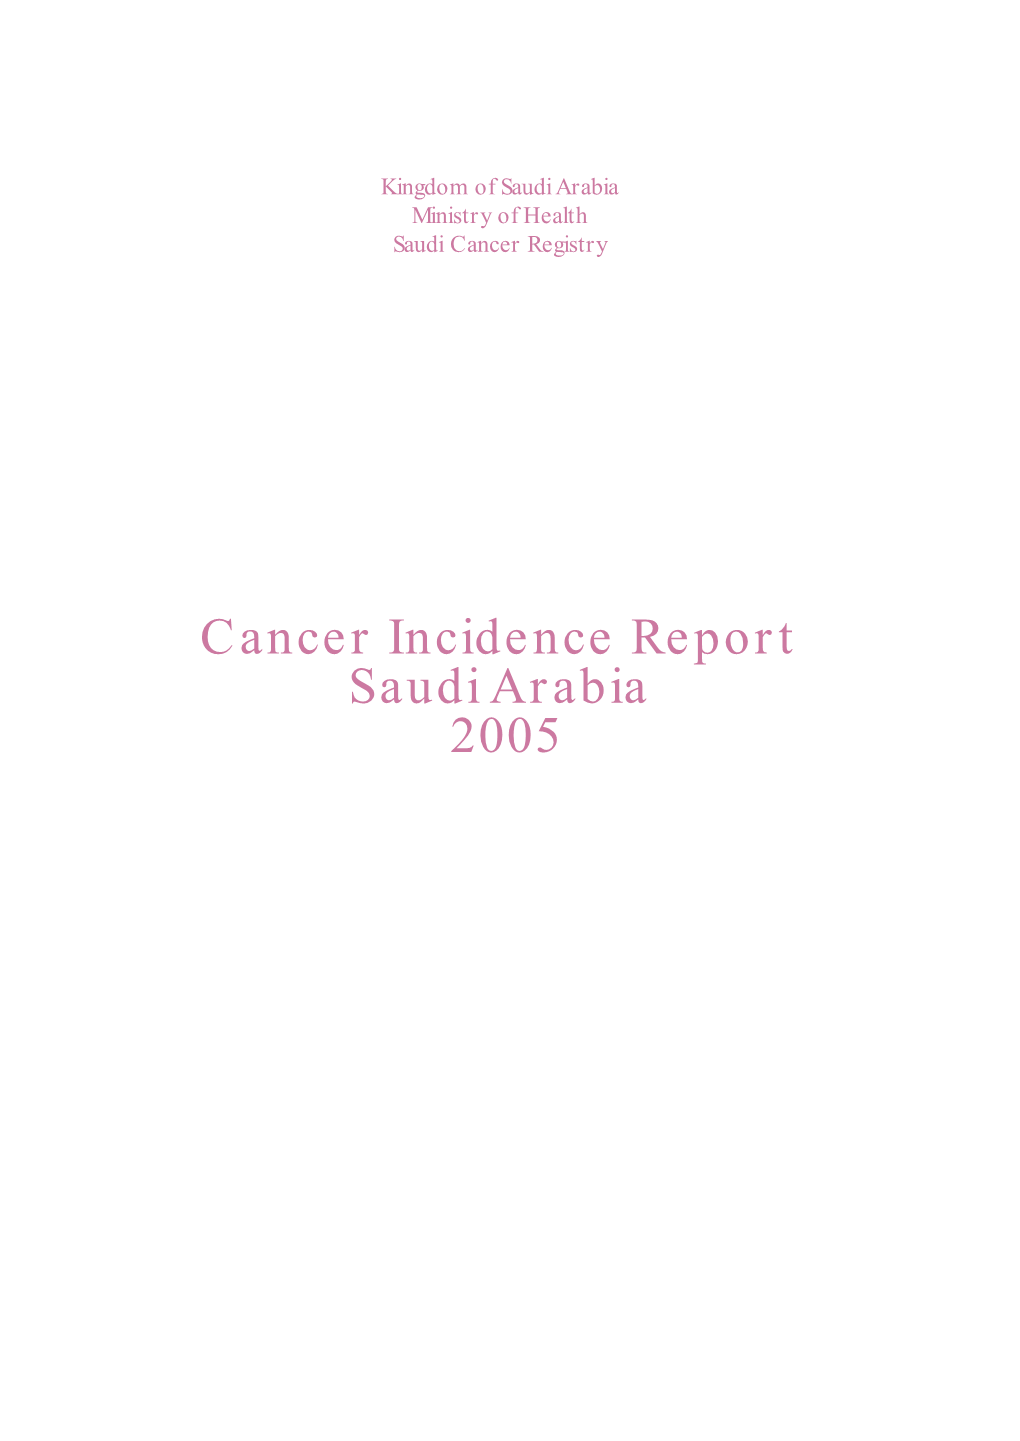 Cancer Incidence Report Saudi Arabia 2005